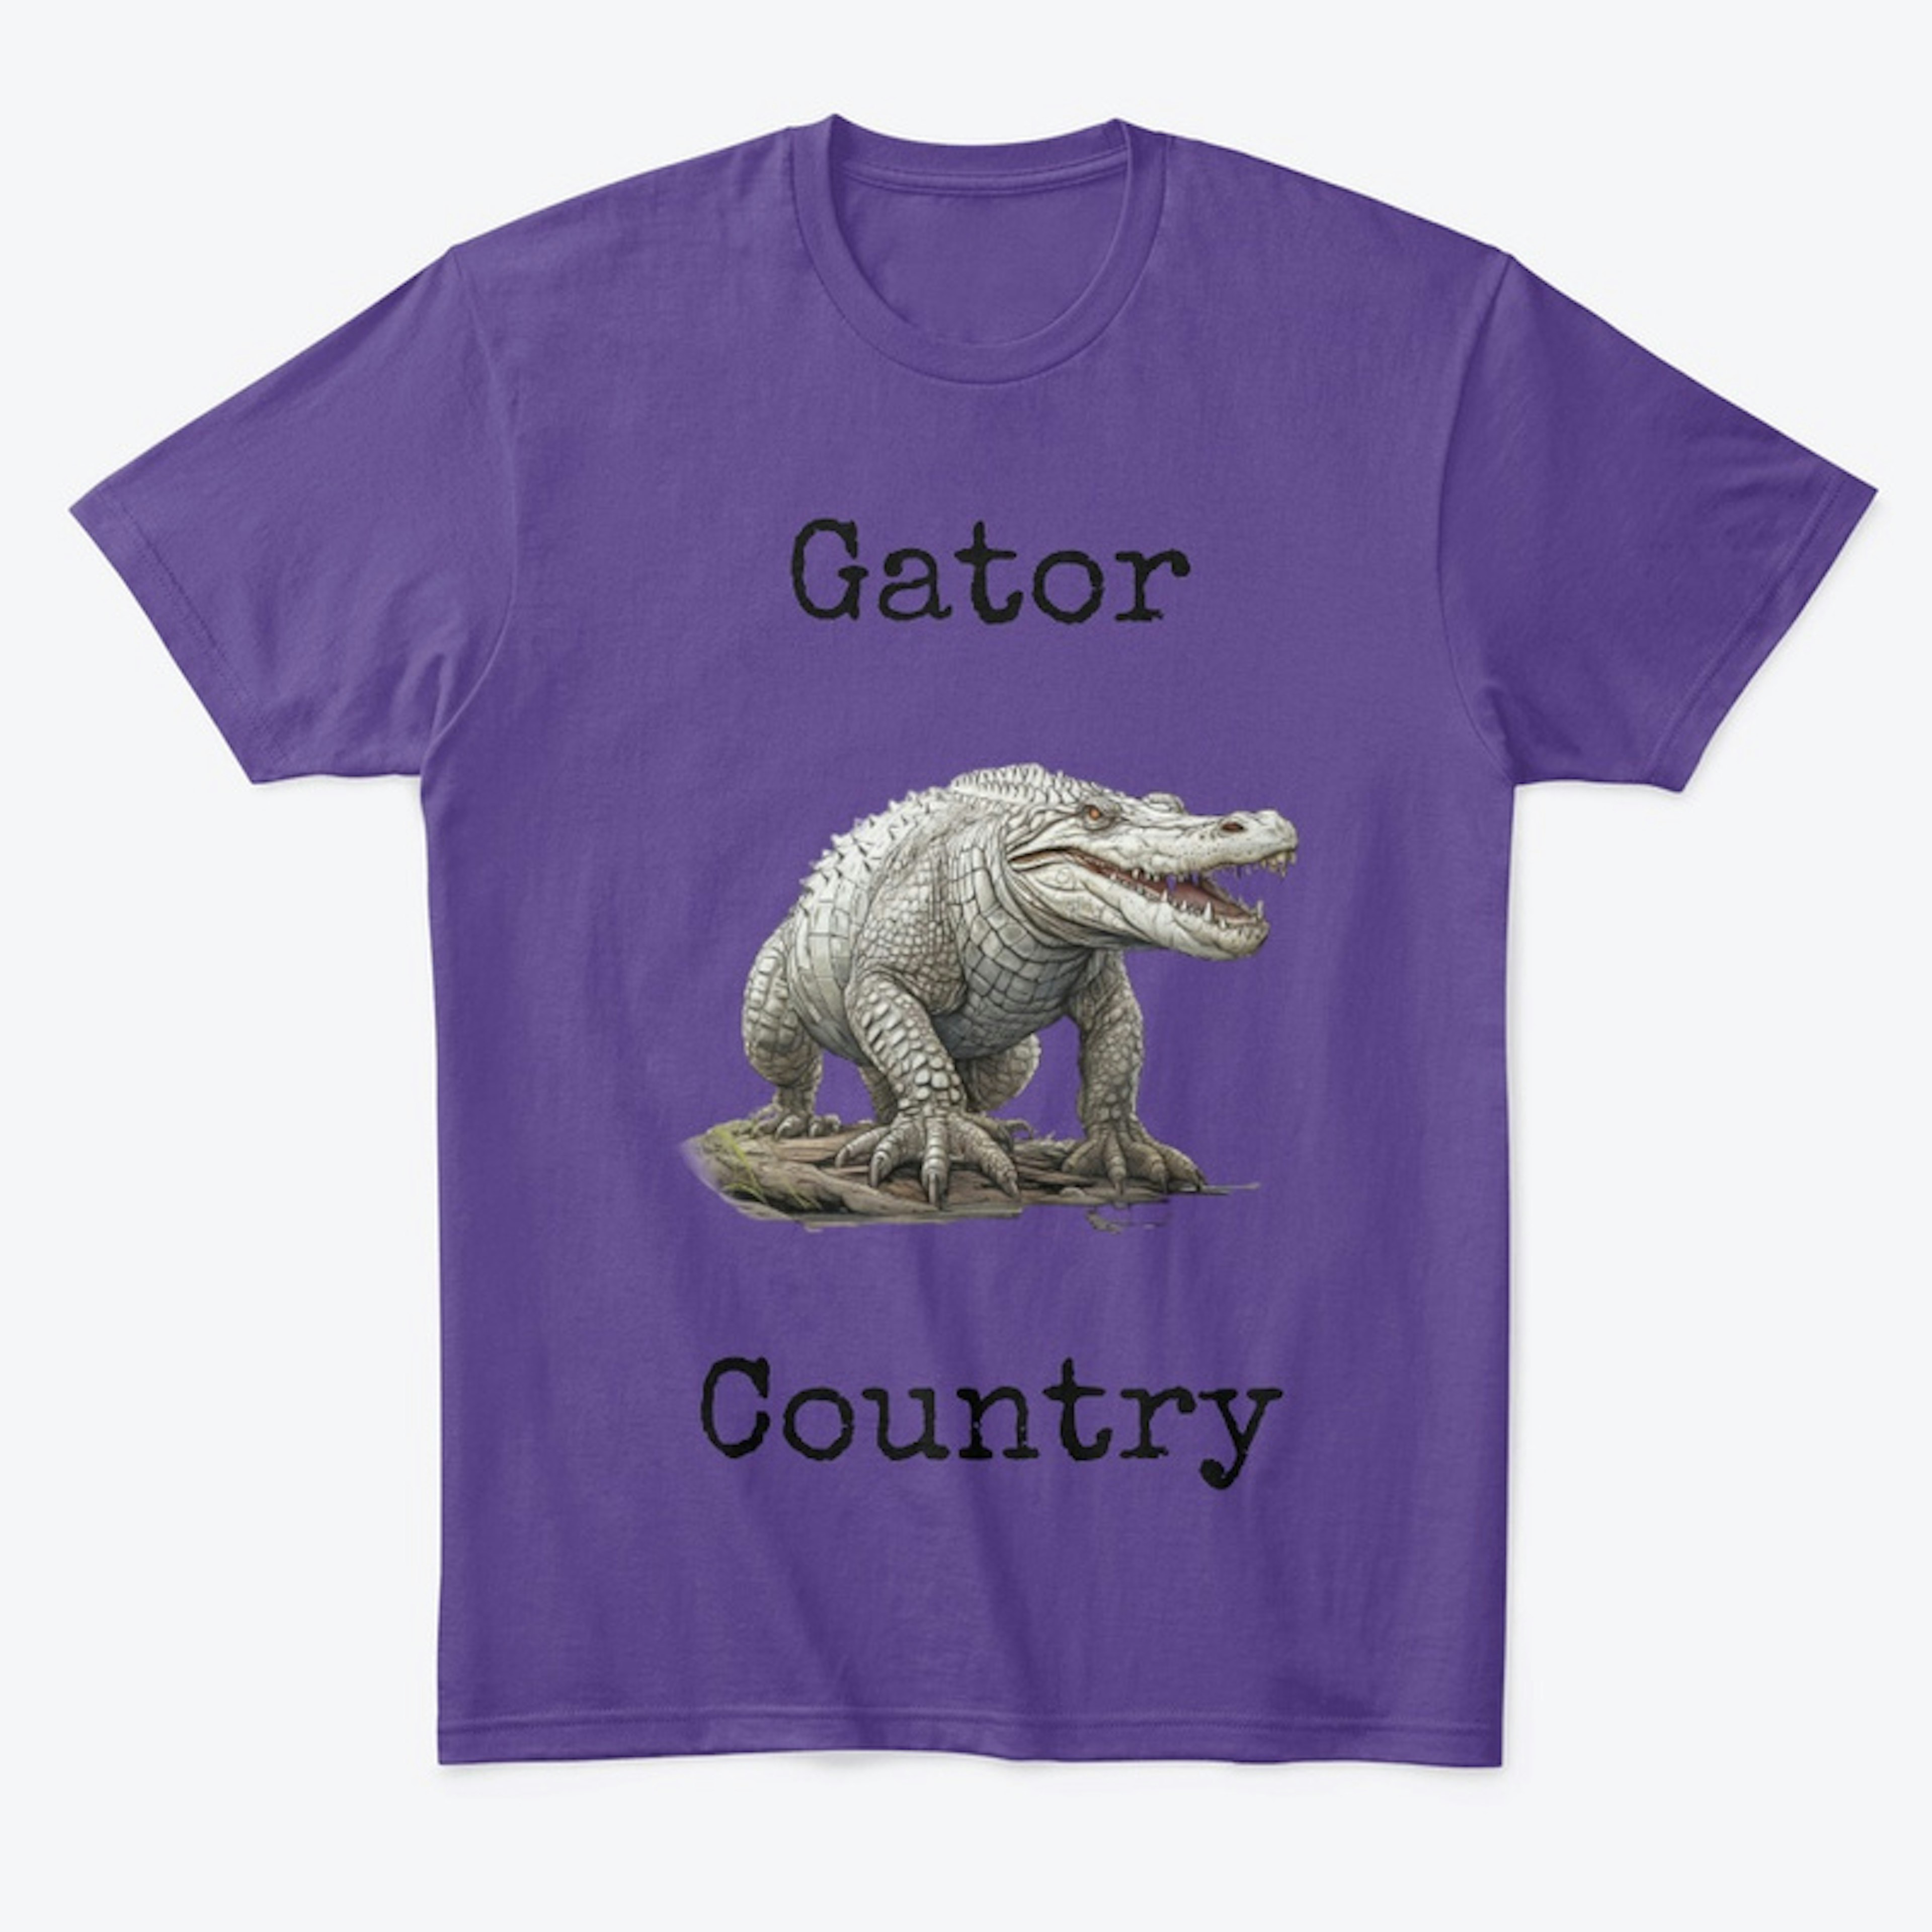 Gator country